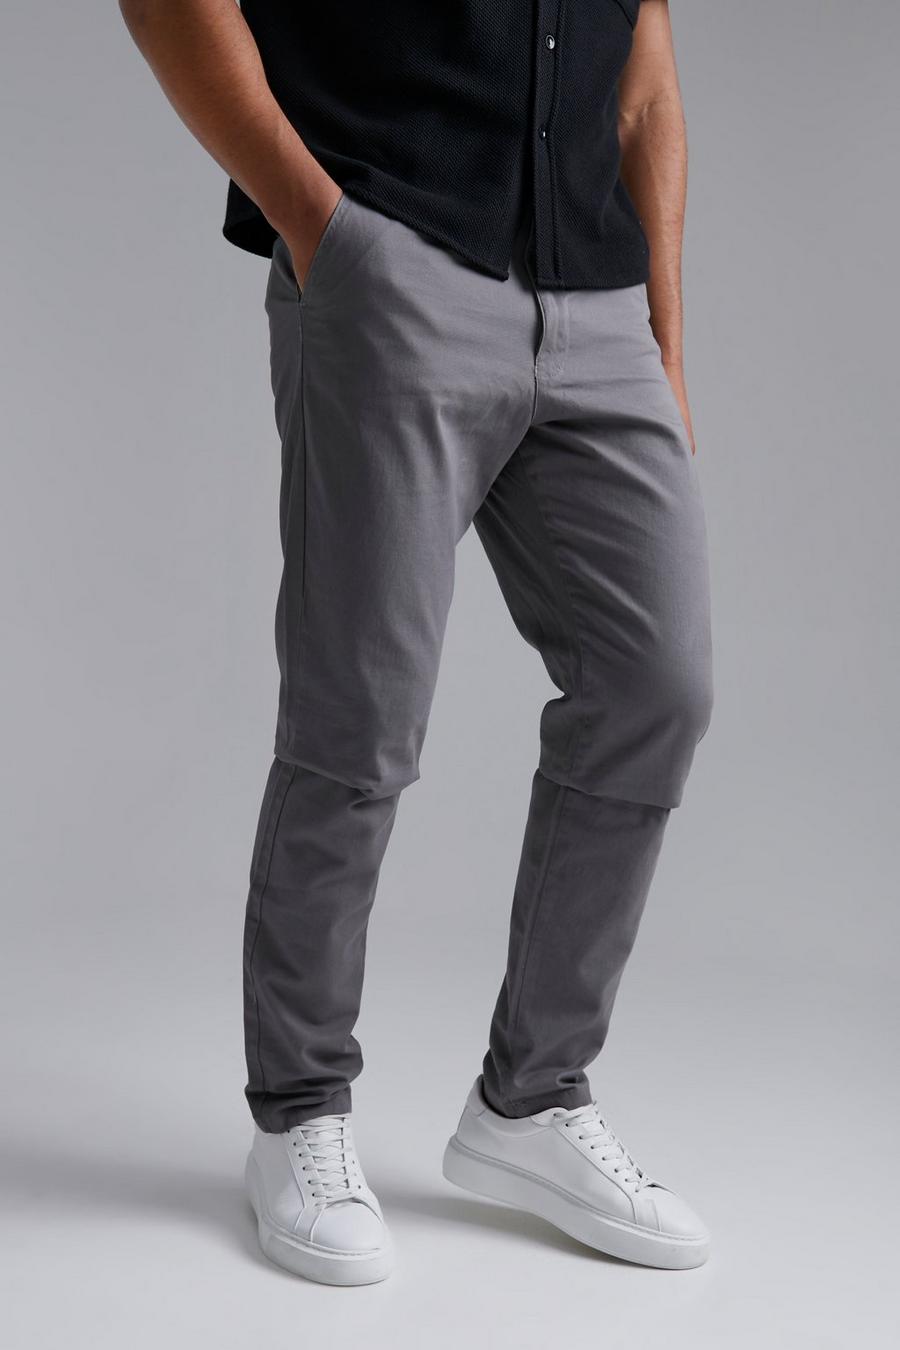 Pantalón Tall chino ajustado, Charcoal gris